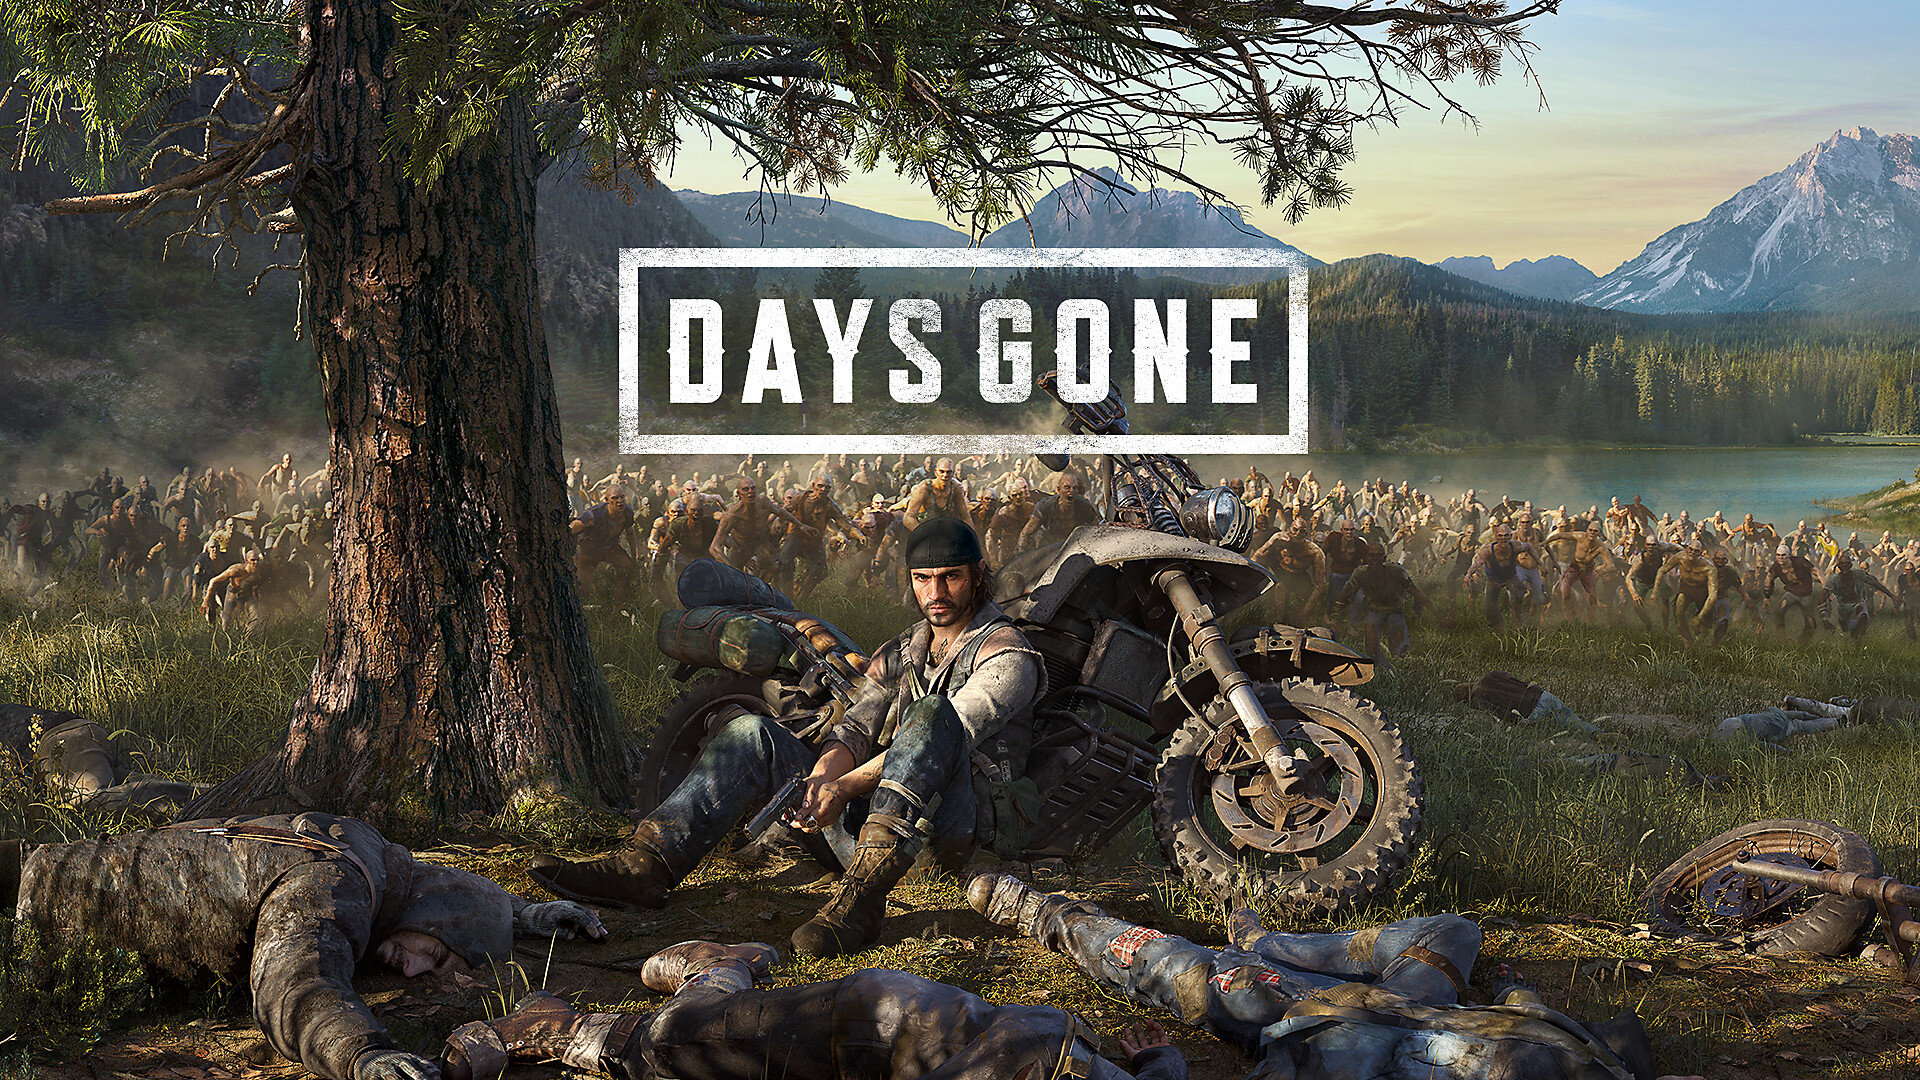 Days Gone open world trailer shows off heart-pounding action -  GameRevolution